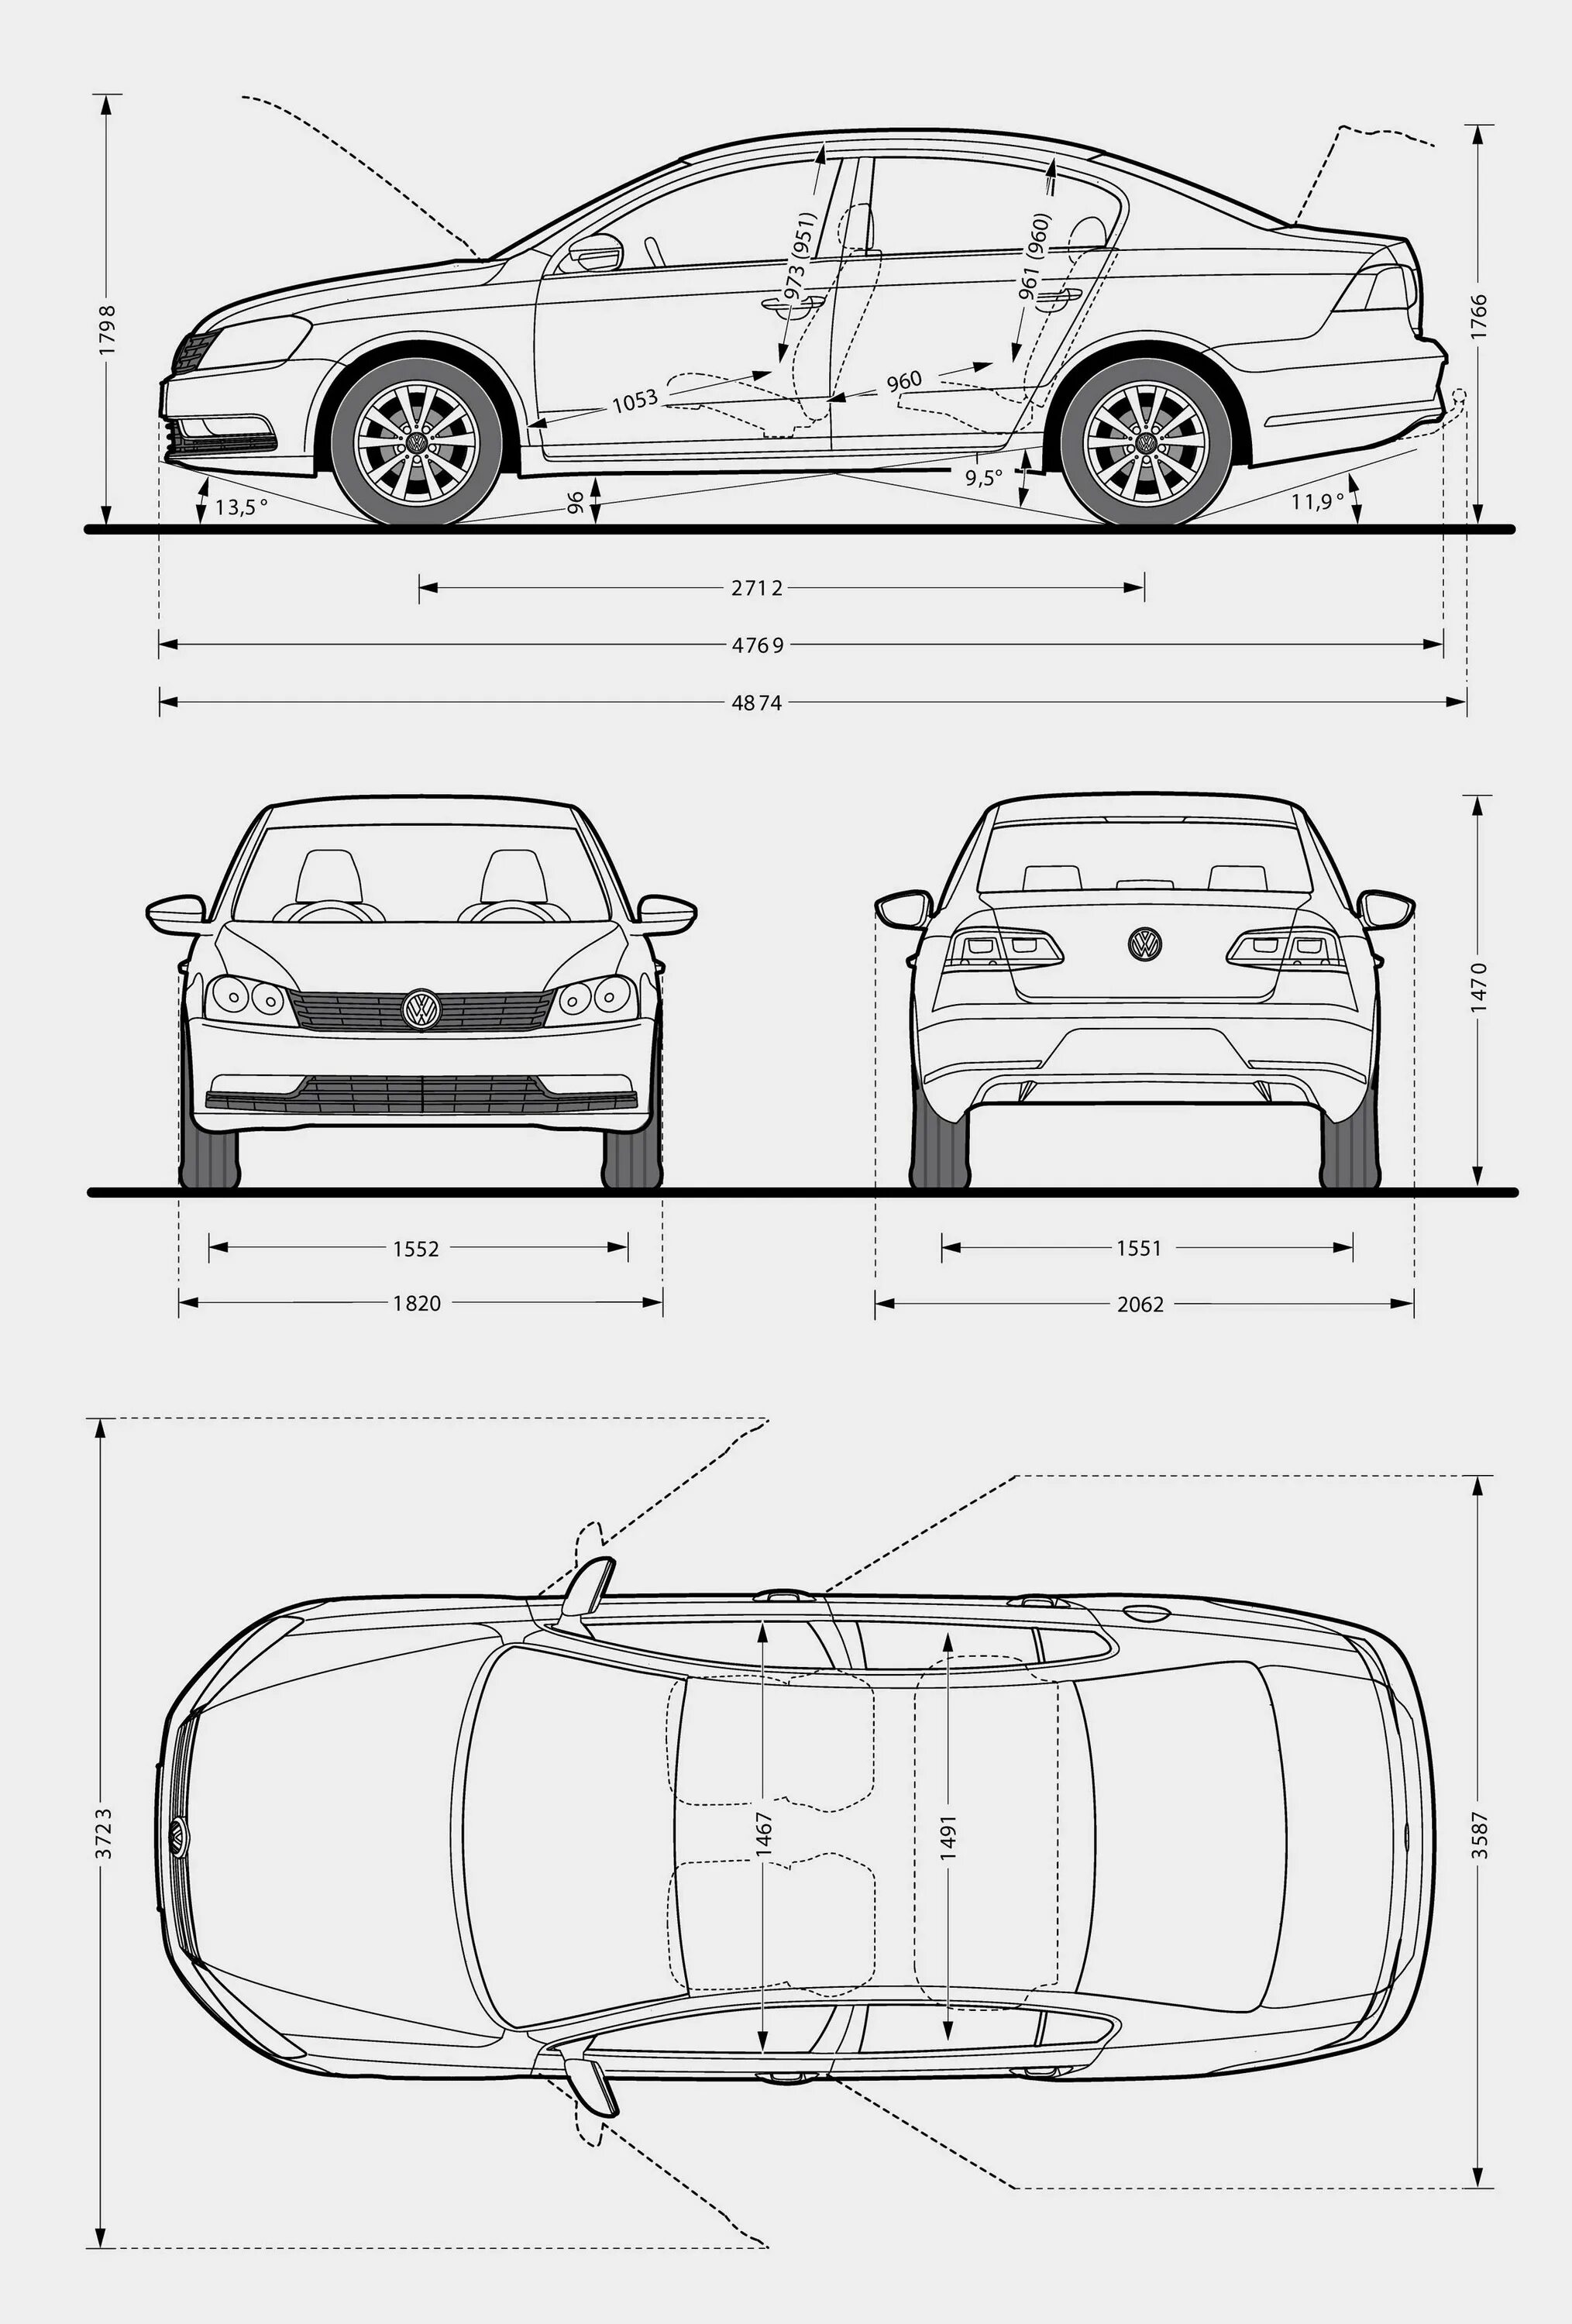 Ширина салона Passat b7. Volkswagen Passat b6 Габаритные Размеры. Габариты Фольксваген Пассат б7. Габариты Фольксваген Пассат б6 седан. Пассат универсал длина